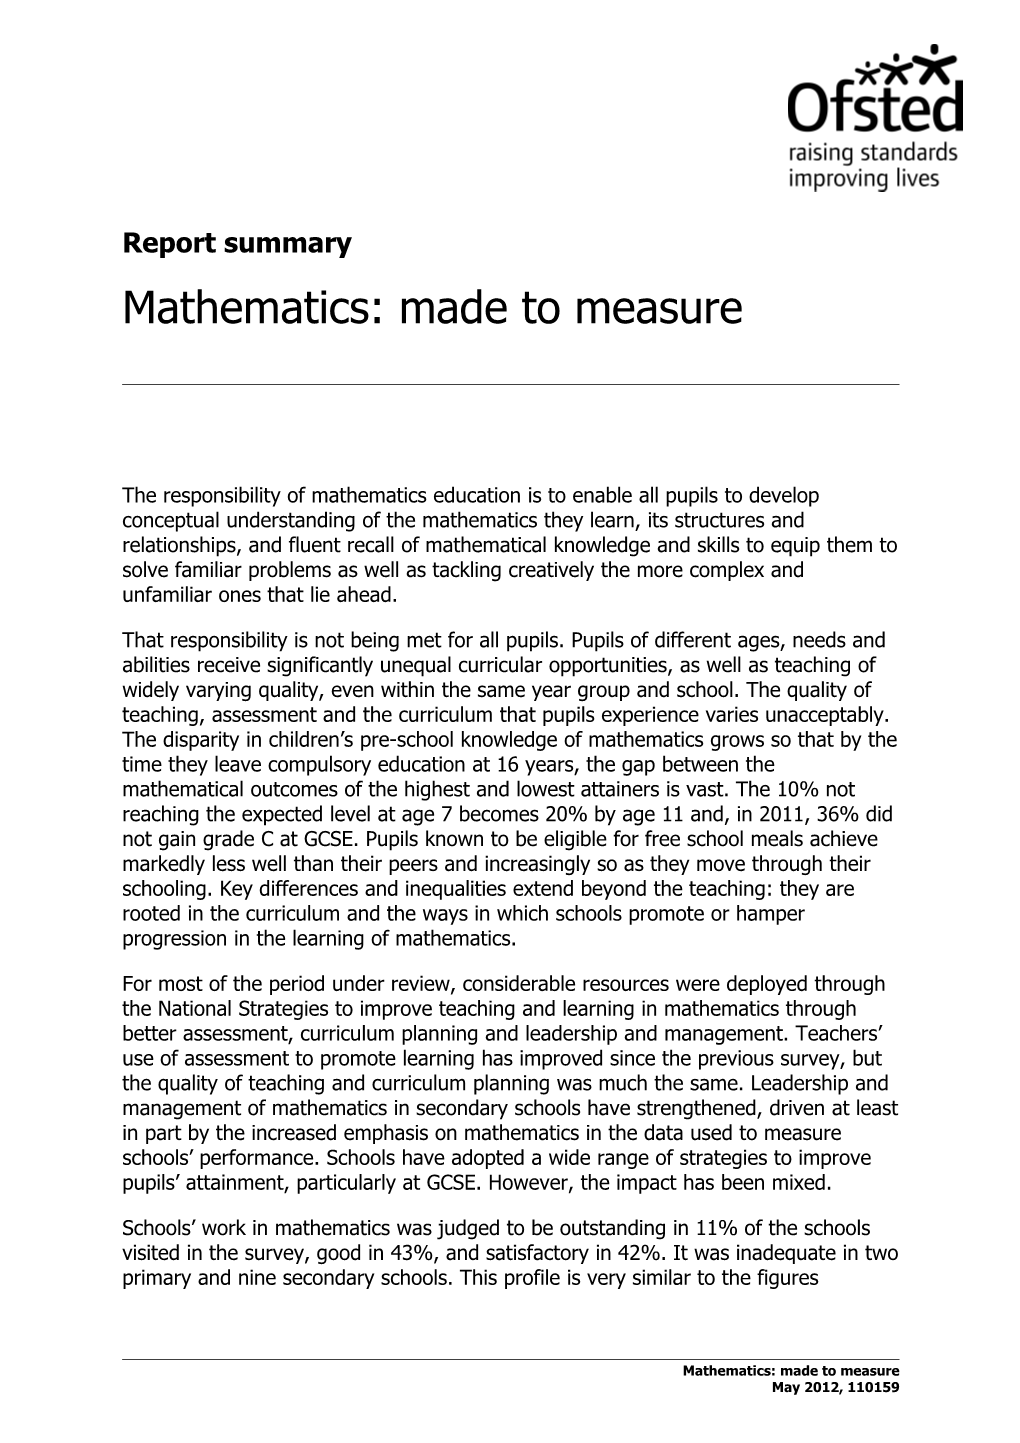 Mathematics: Made to Measure